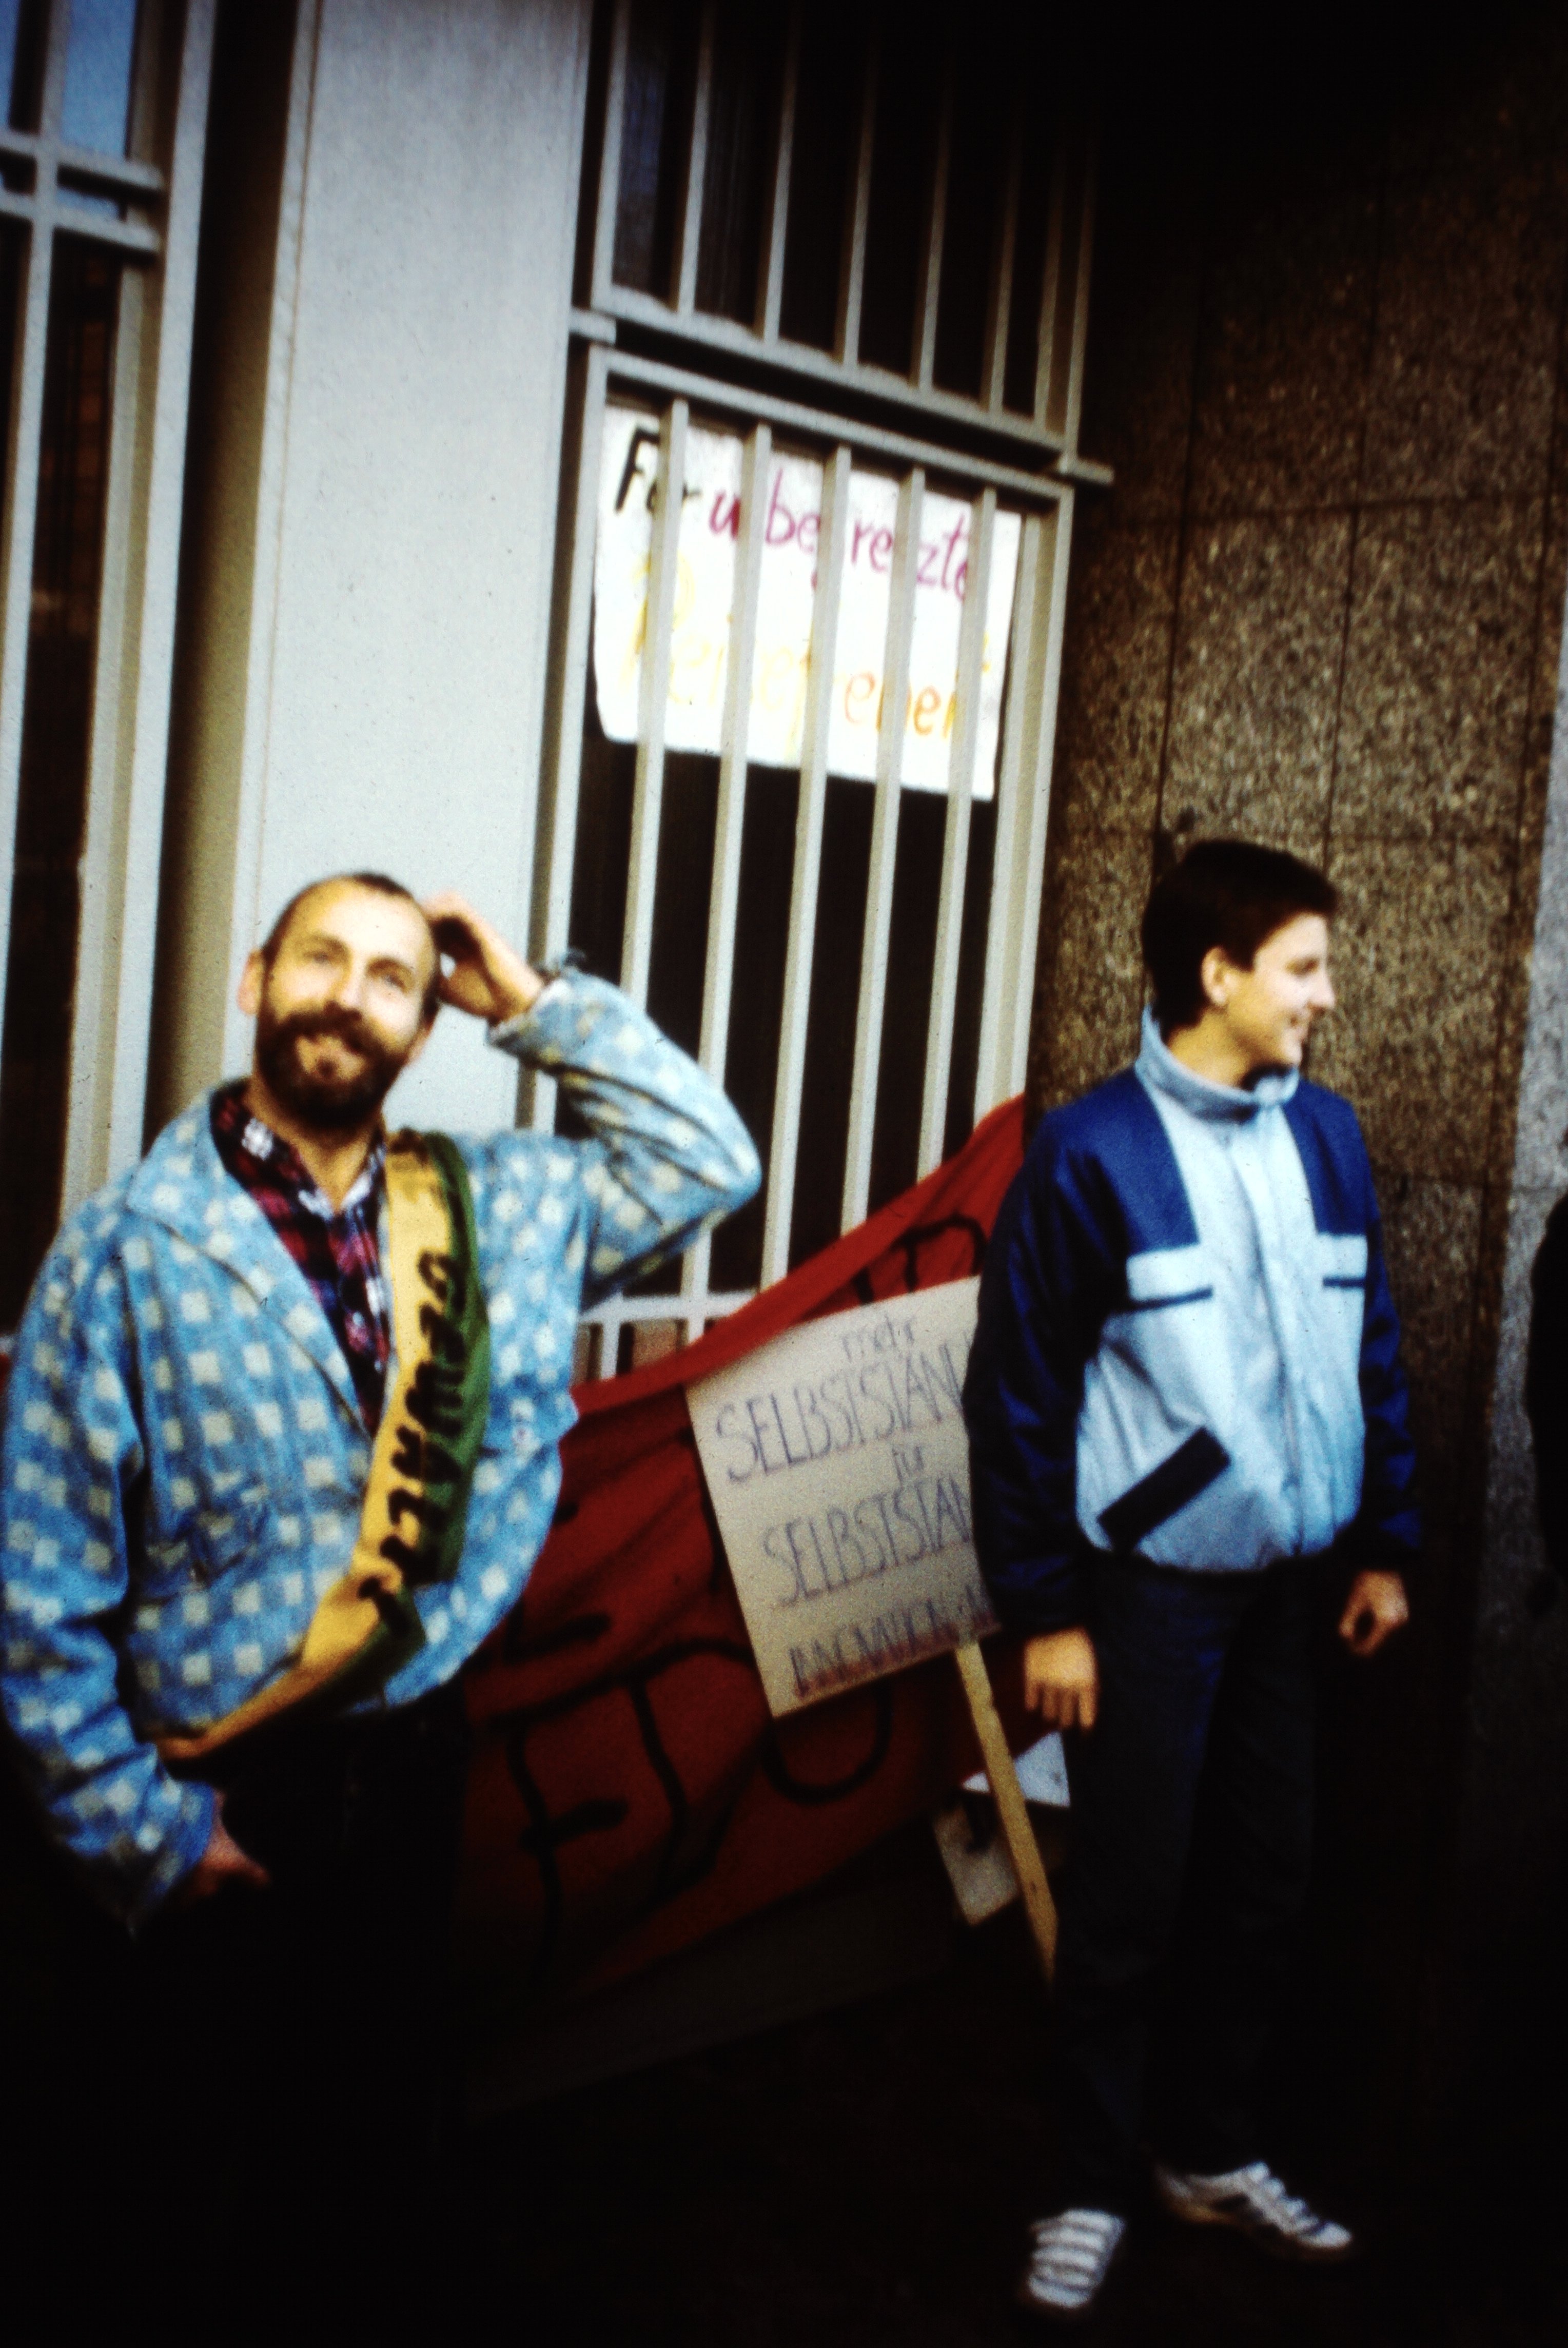 Großdemonstration in Ost-Berlin am 04. November 1989: Demonstranten am Straßenrand (DDR Geschichtsmuseum im Dokumentationszentrum Perleberg CC BY-SA)